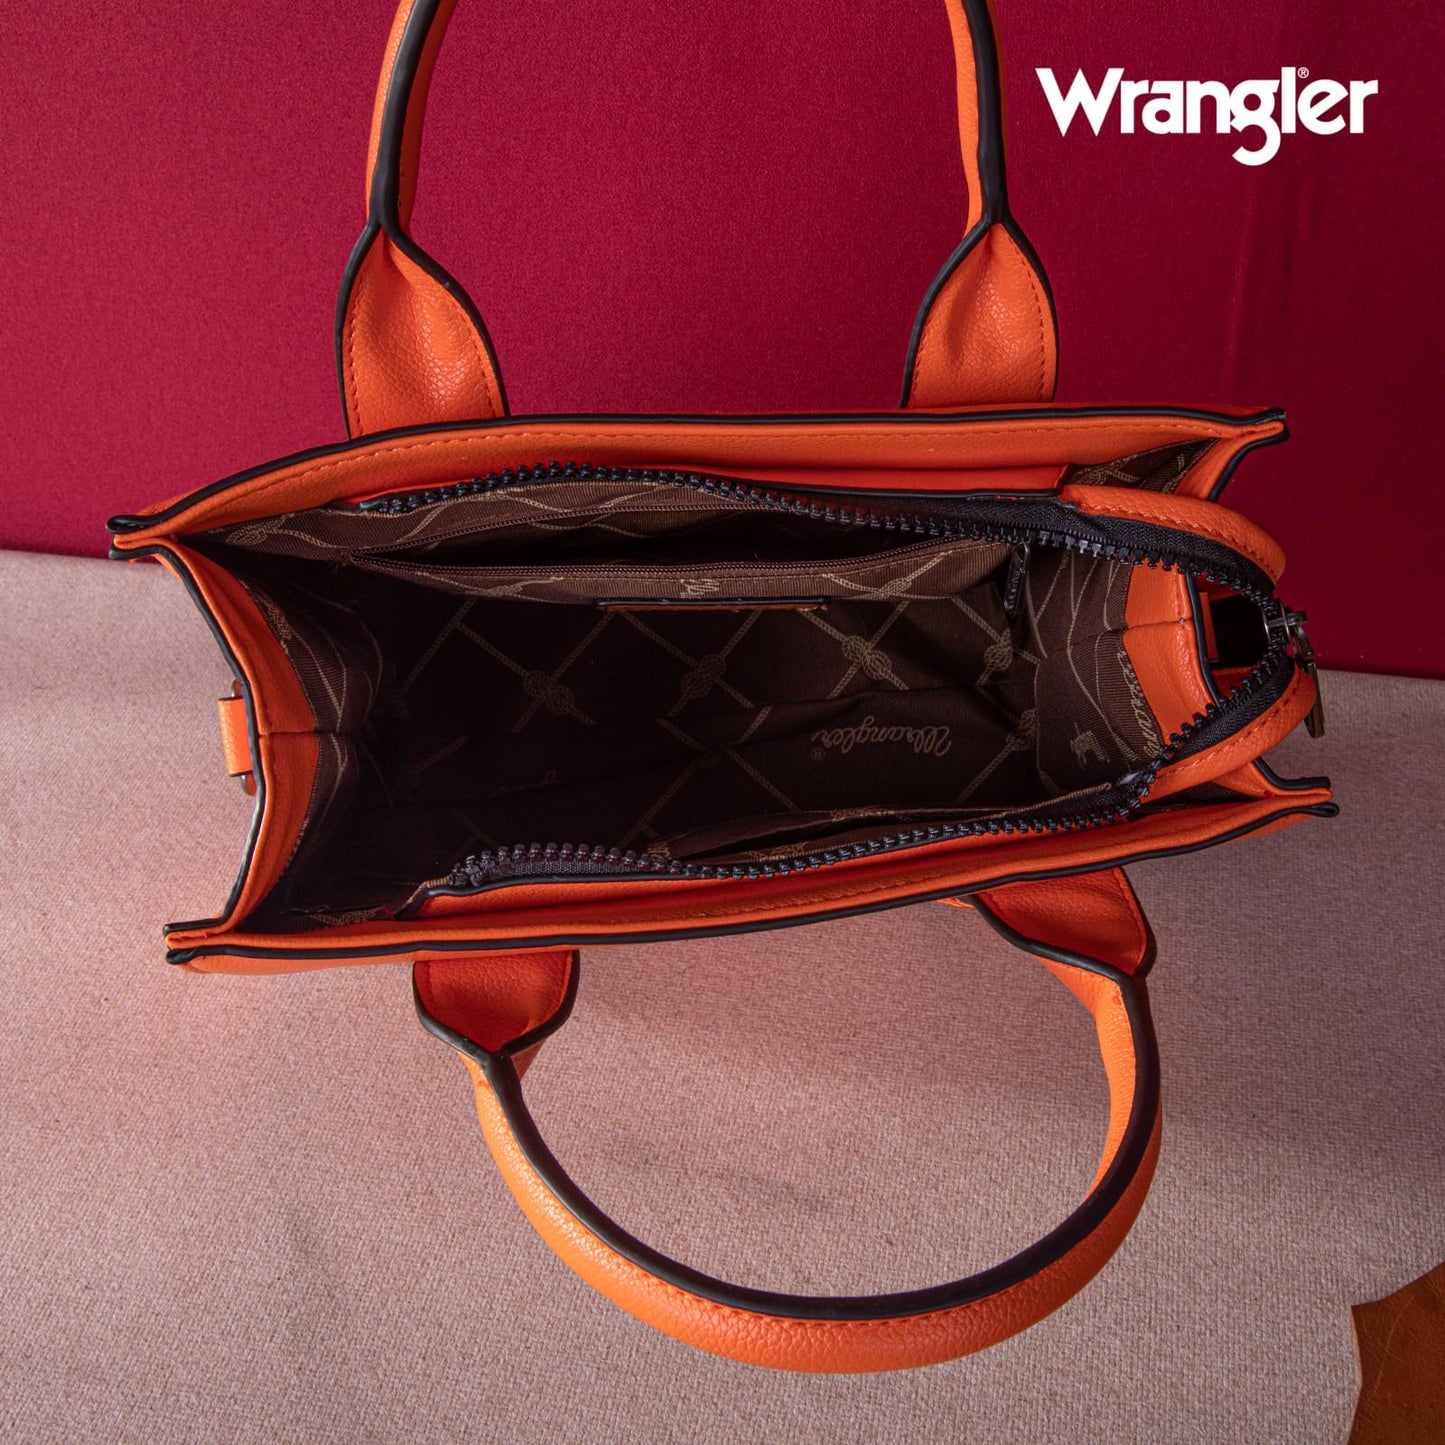 Wrangler Top Handle Handbags Tote Bag for Women Satchel Bag Shoulder Bag Purse for Women with Crossbody Strap LG-WG70-8120DOR